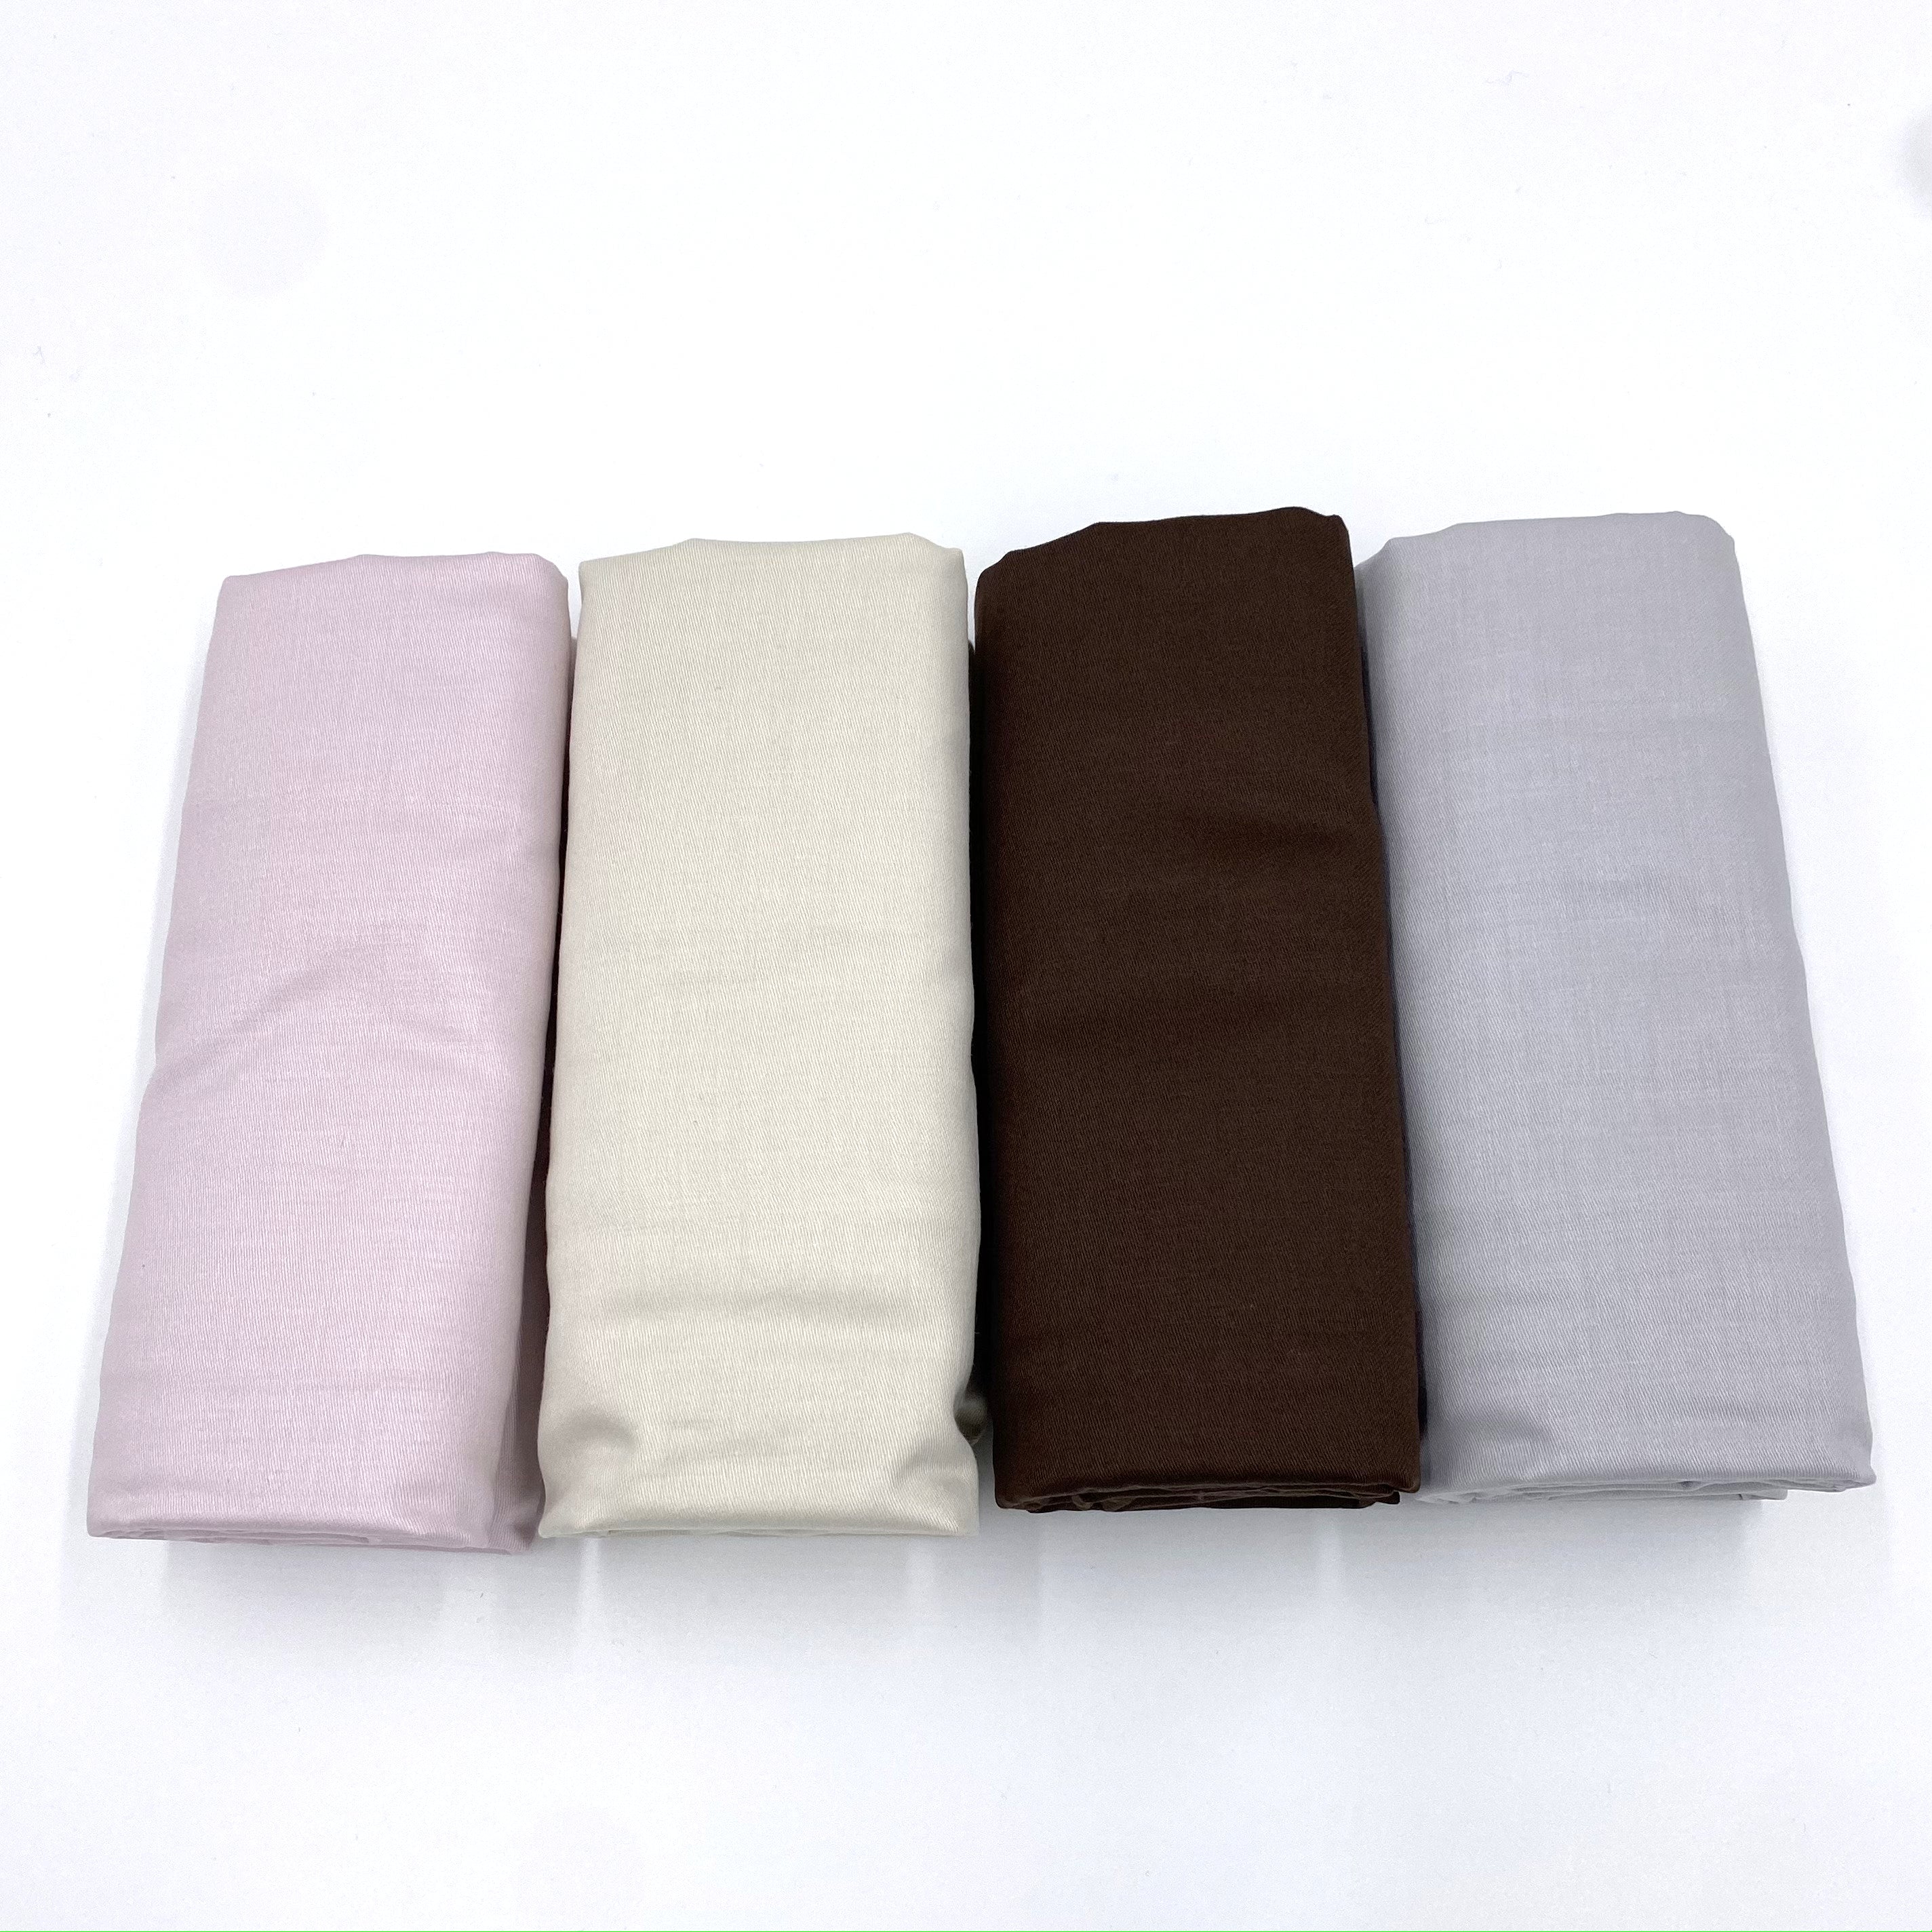 FITLABO(西川株式会社) オーダーメイド枕 ワイドサイズ専用枕カバー